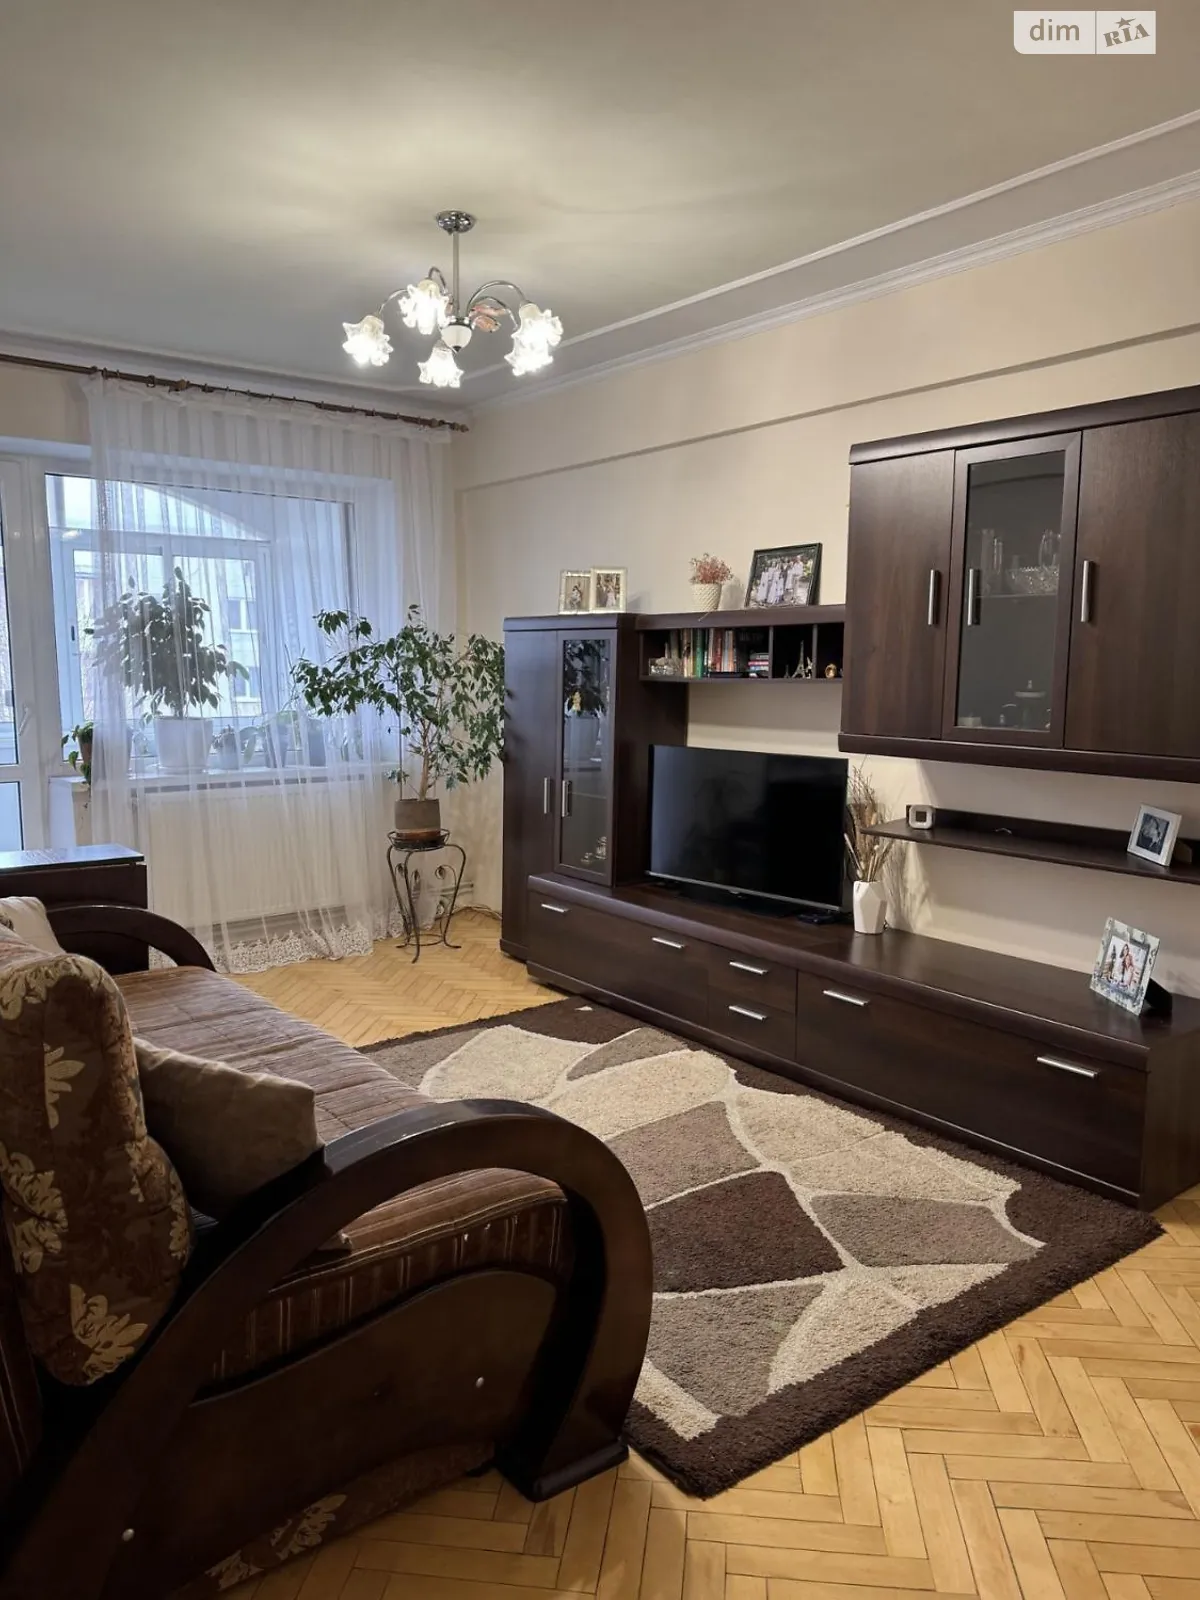 2-кімнатна квартира 50 кв. м у Тернополі, вул. Протасевича - фото 3